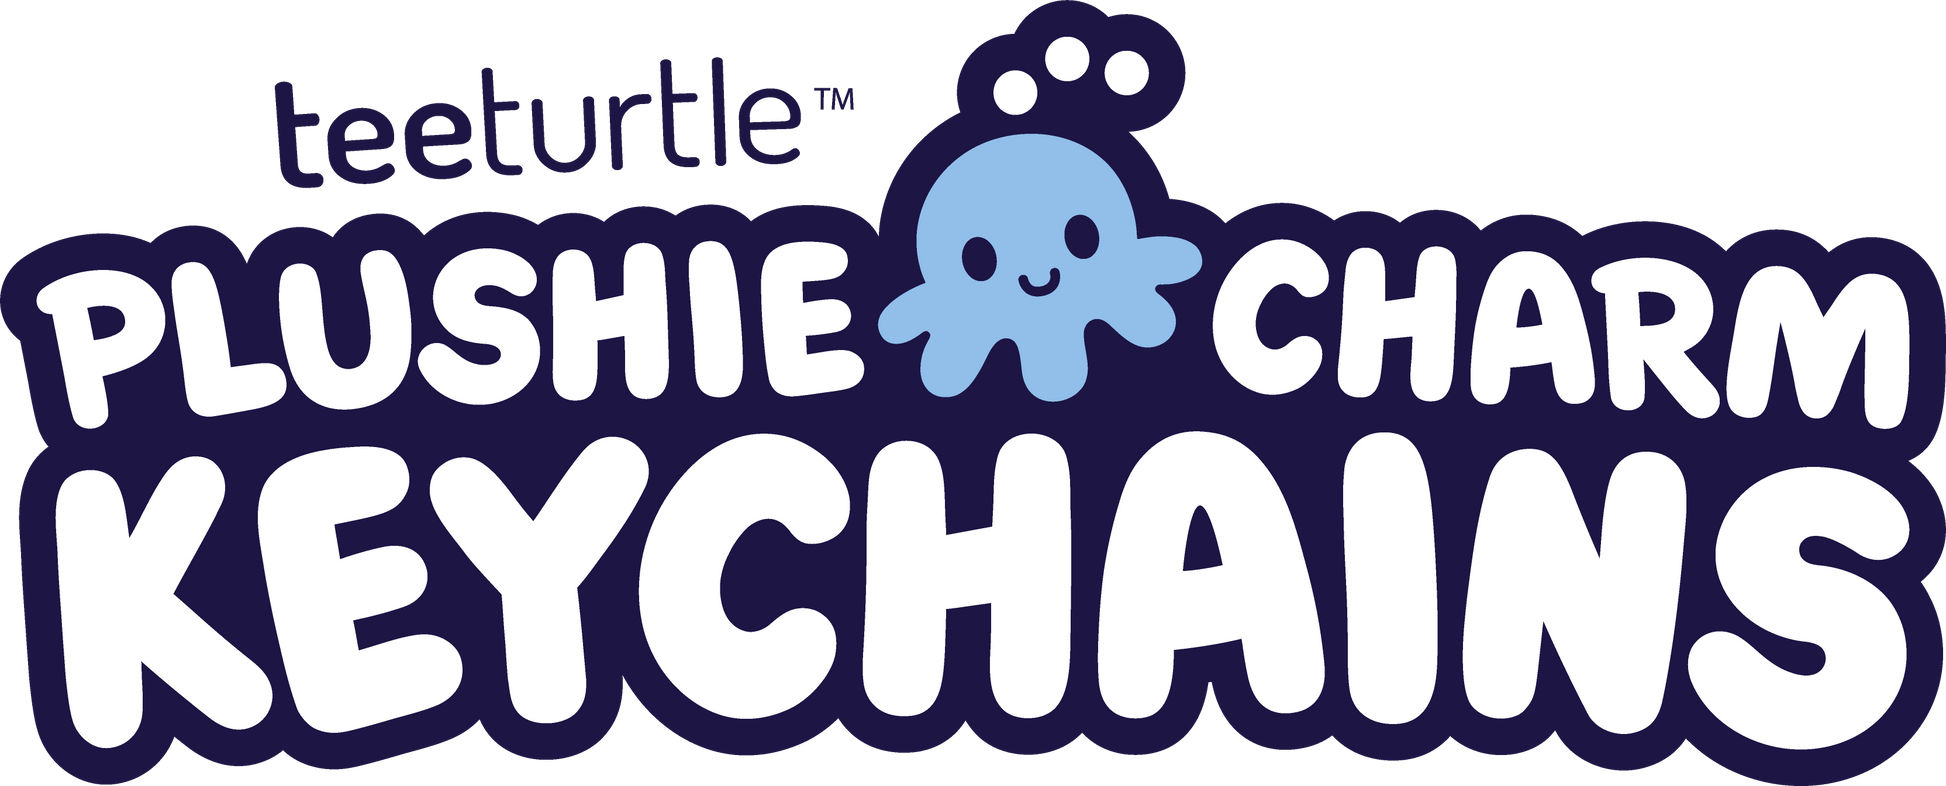 The logo for TeeTurtle's TeeTurtle Octopus Plushie Charm Keychain.